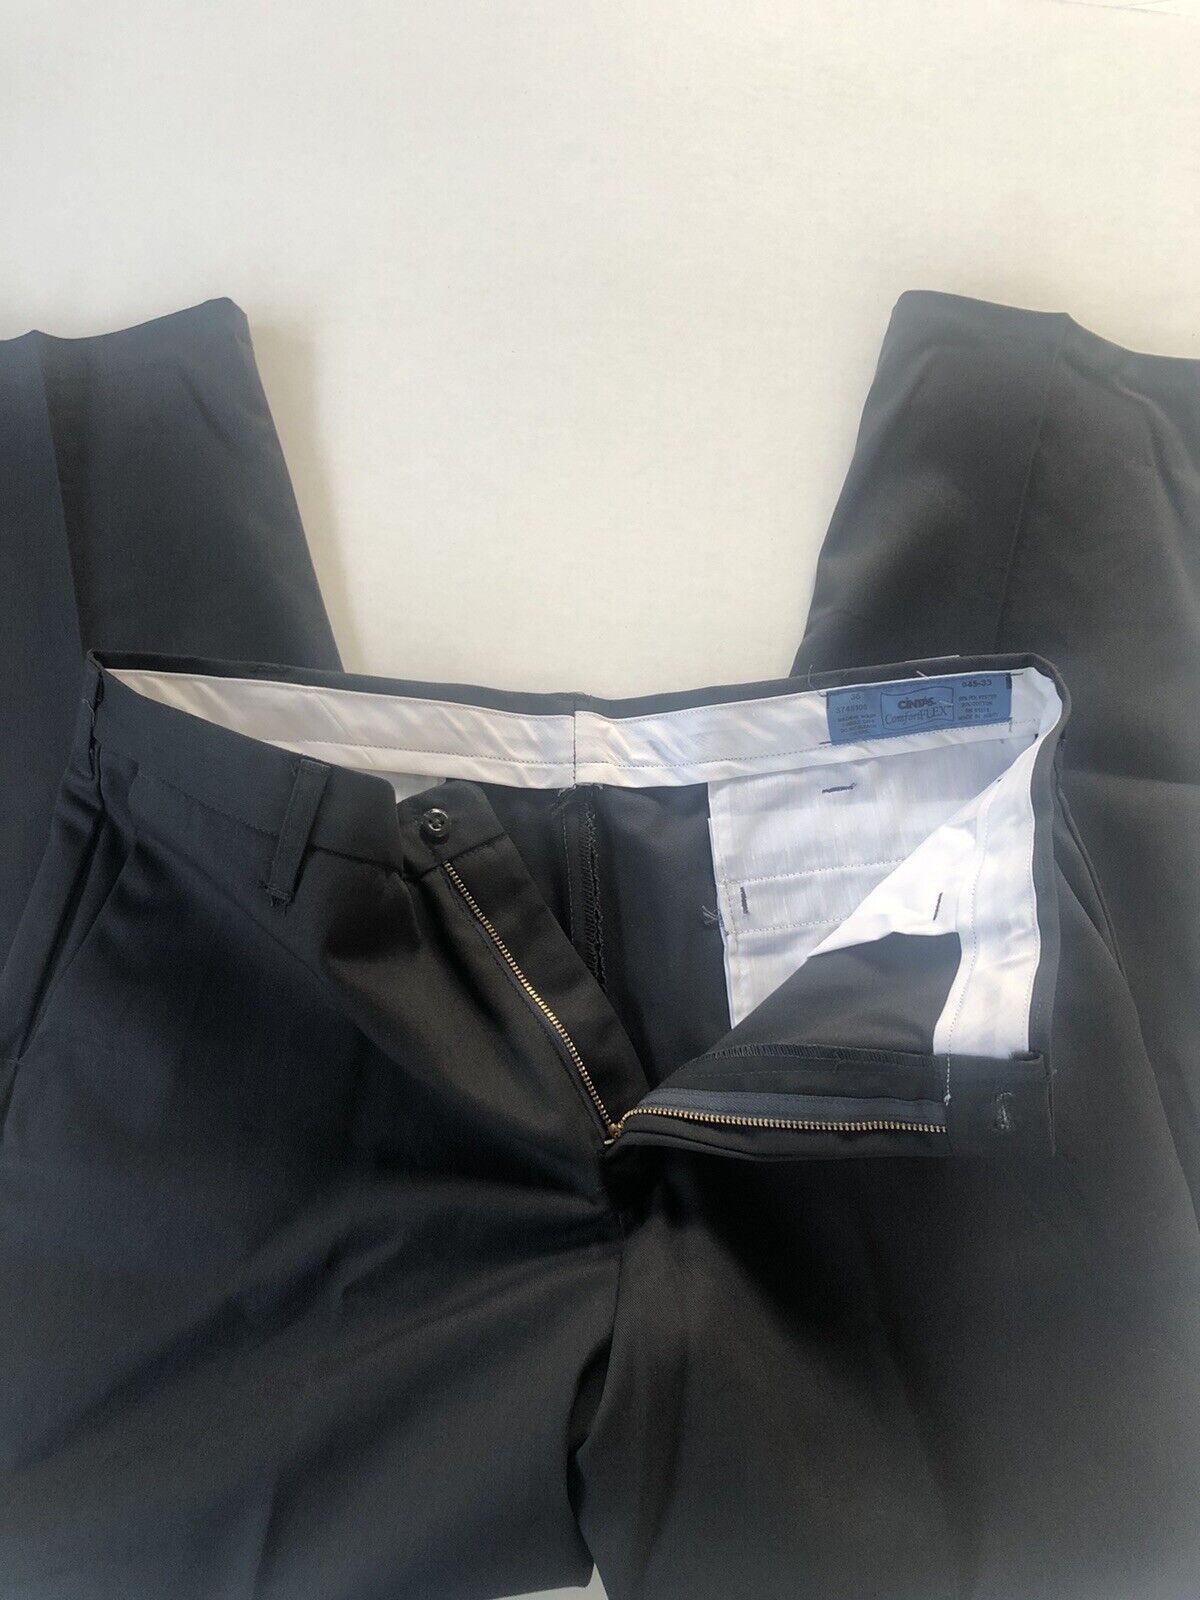 3 Cintas Comfort Flex Charcoal  Gray Work Pants Size 36x30 #945-33 cintas Does Not Apply - фотография #4